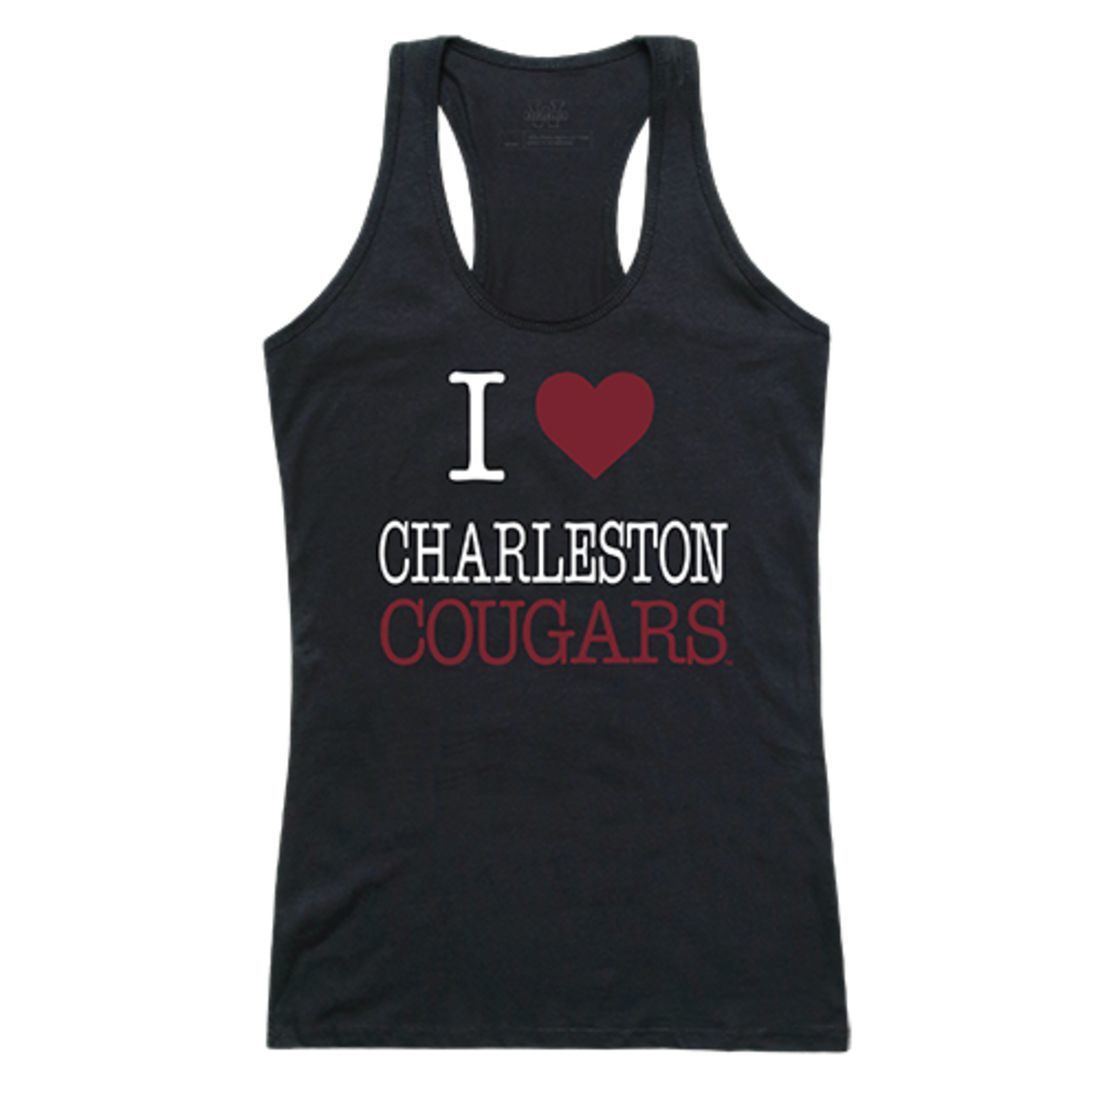 College of Charleston Cougars Womens Love Tank Top Tee T-Shirt Black-Campus-Wardrobe